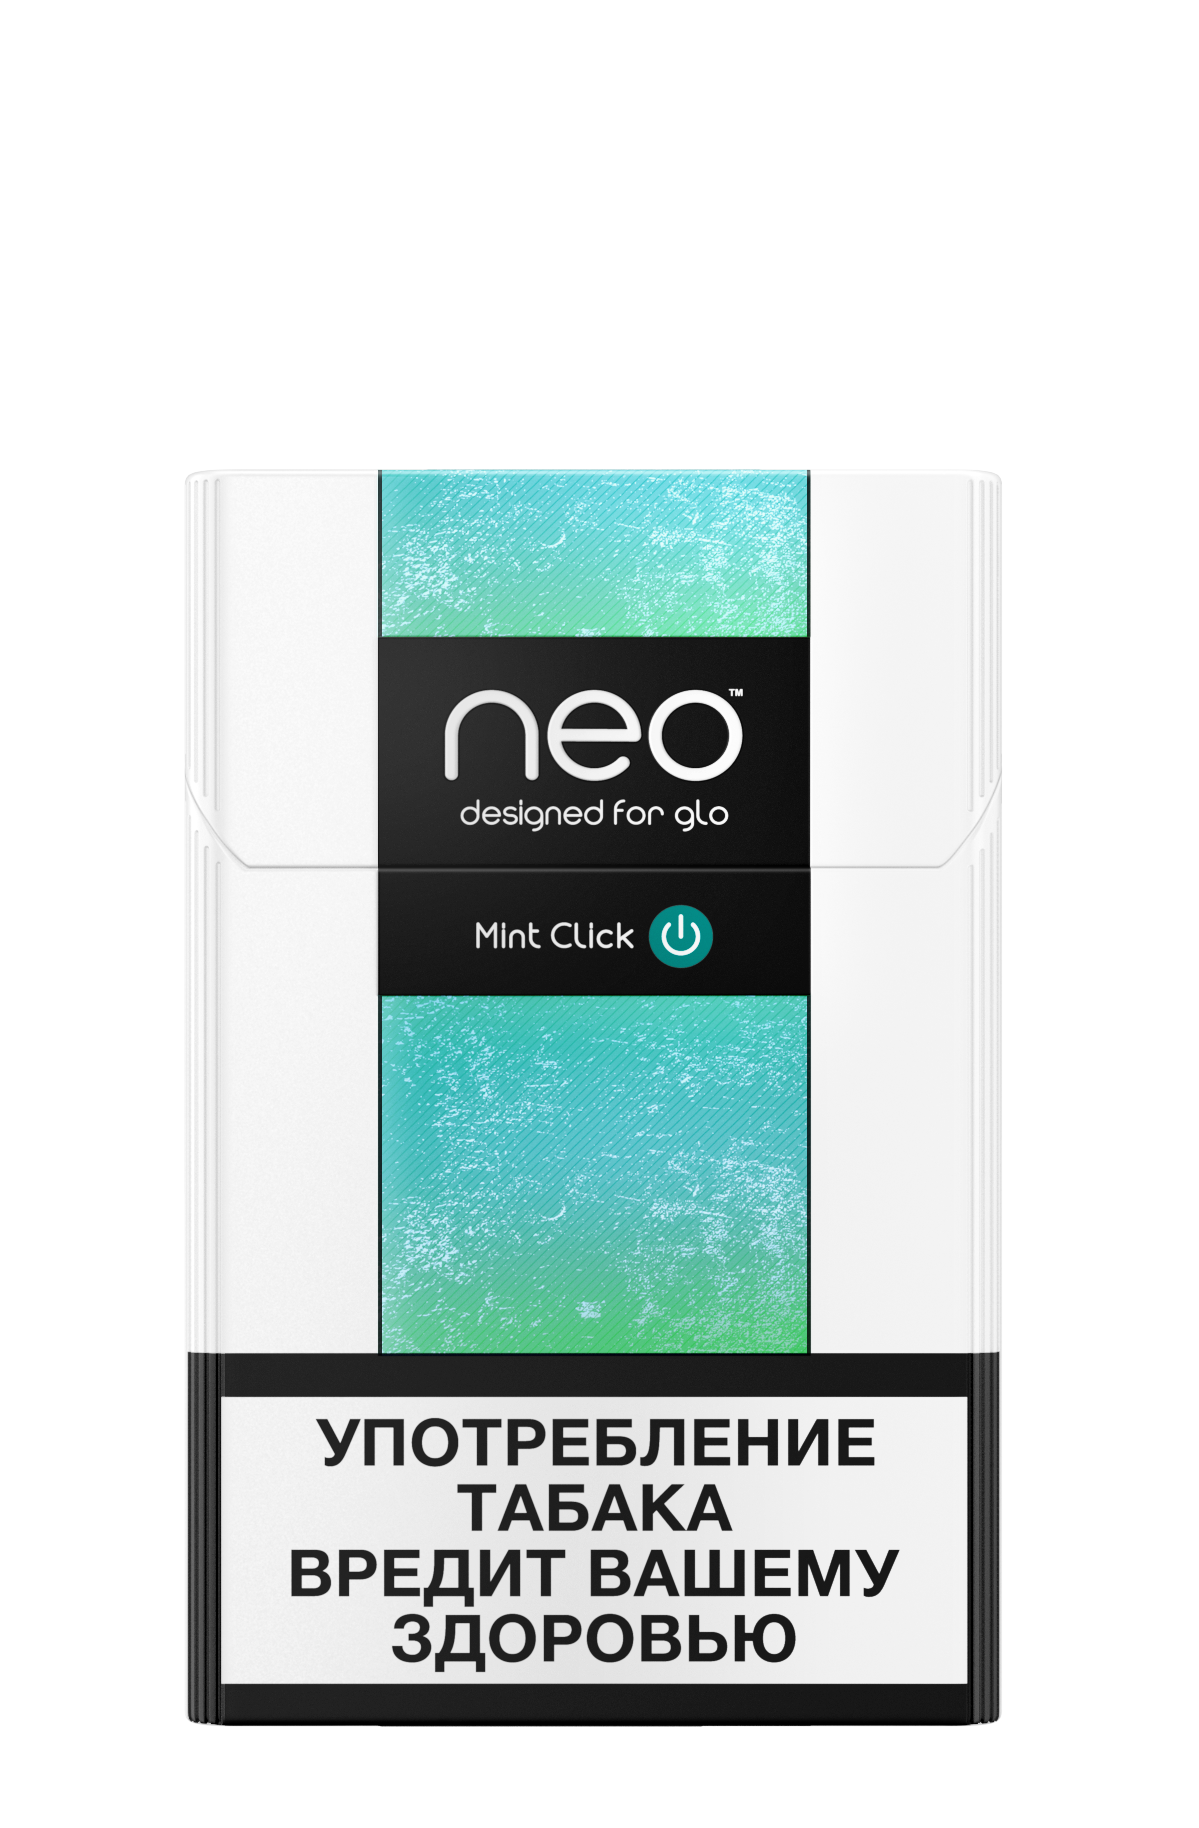 Стики GLO Neo Минт Клик (от 2 пачек) / Классический табак или Фреш с ментолом